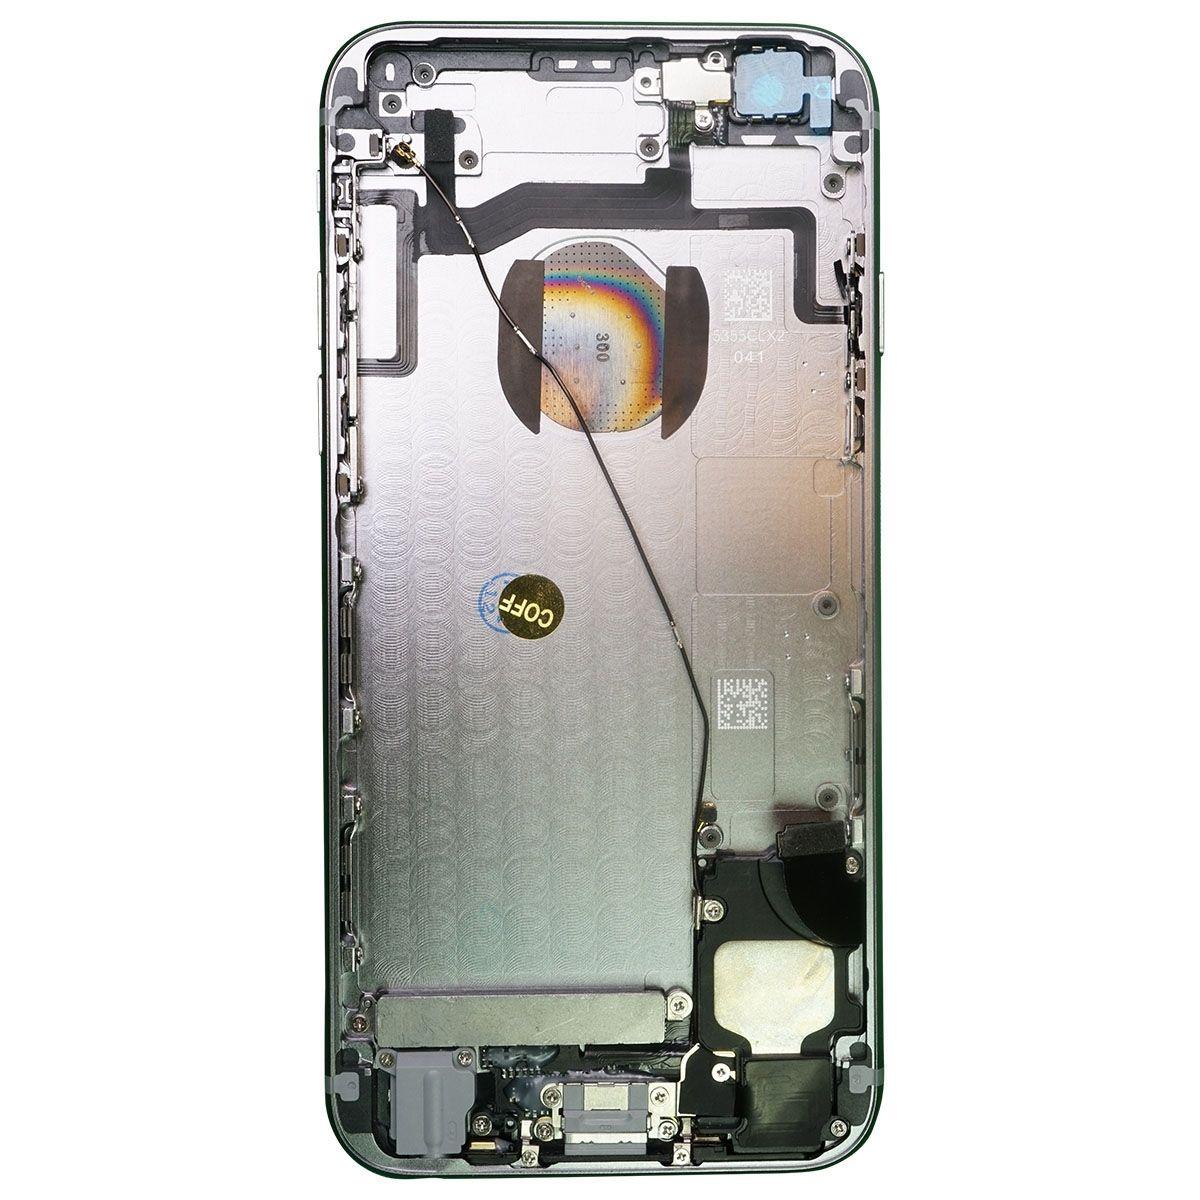 Kryt baterie iPhone 6s + nabíjecí konektor - space gray